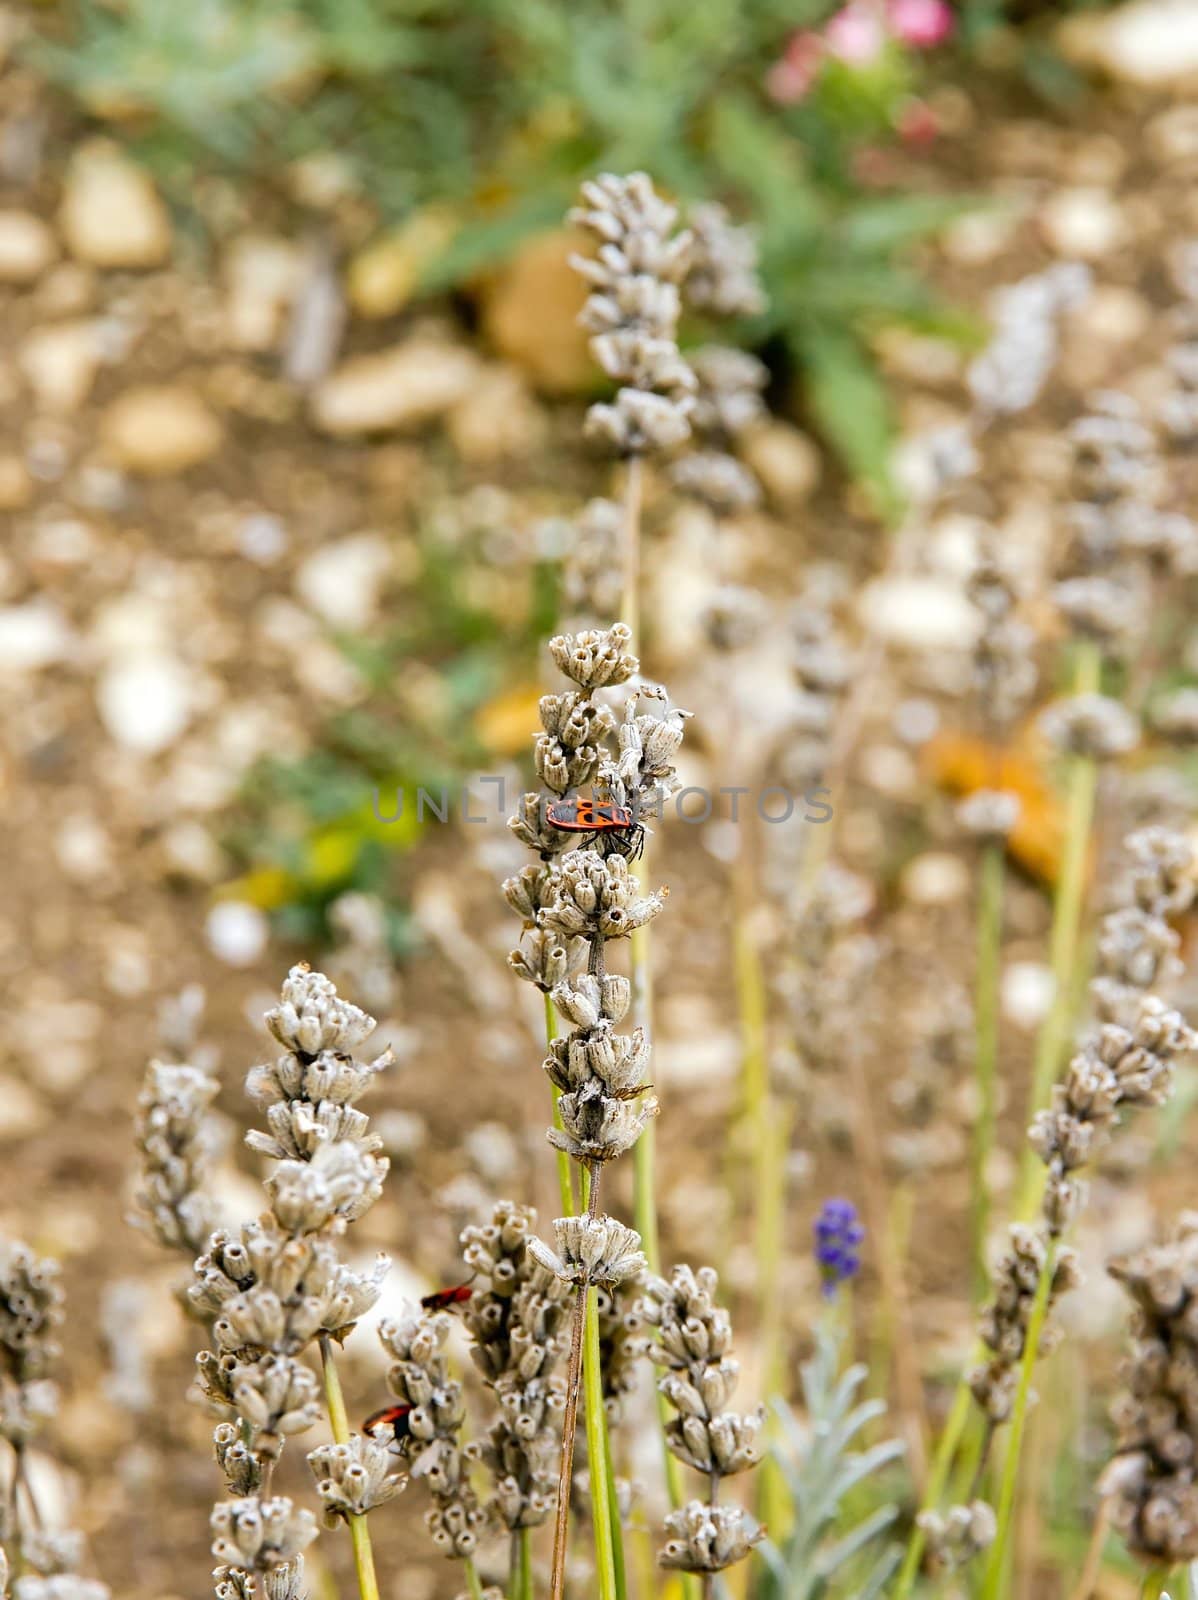 thumbtack, red bug, on a stalk of lavender by neko92vl